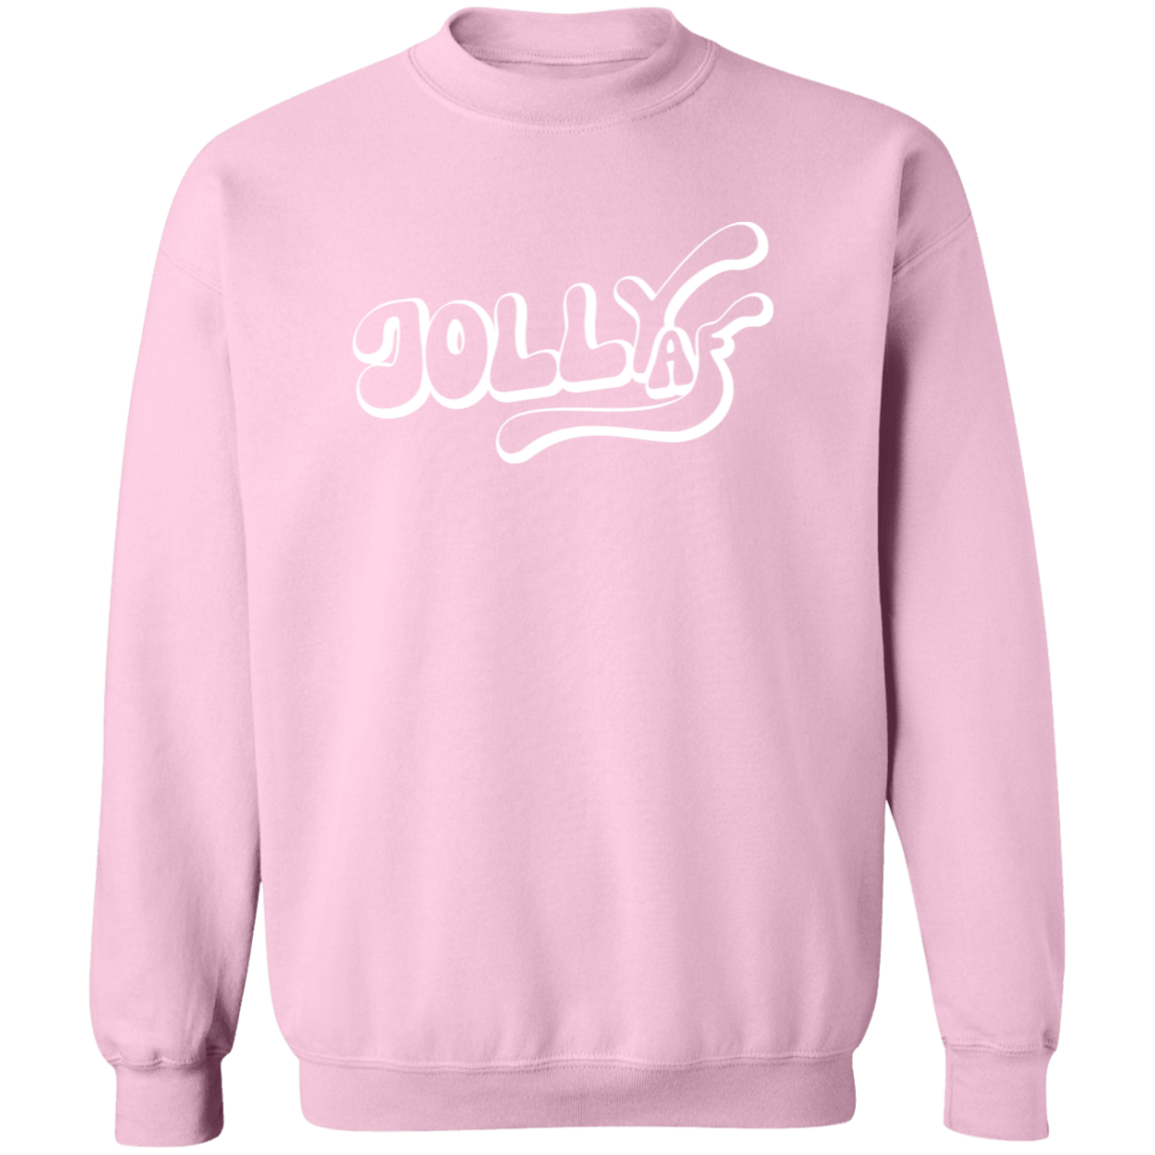 Jolly AF White G180 Crewneck Pullover Sweatshirt